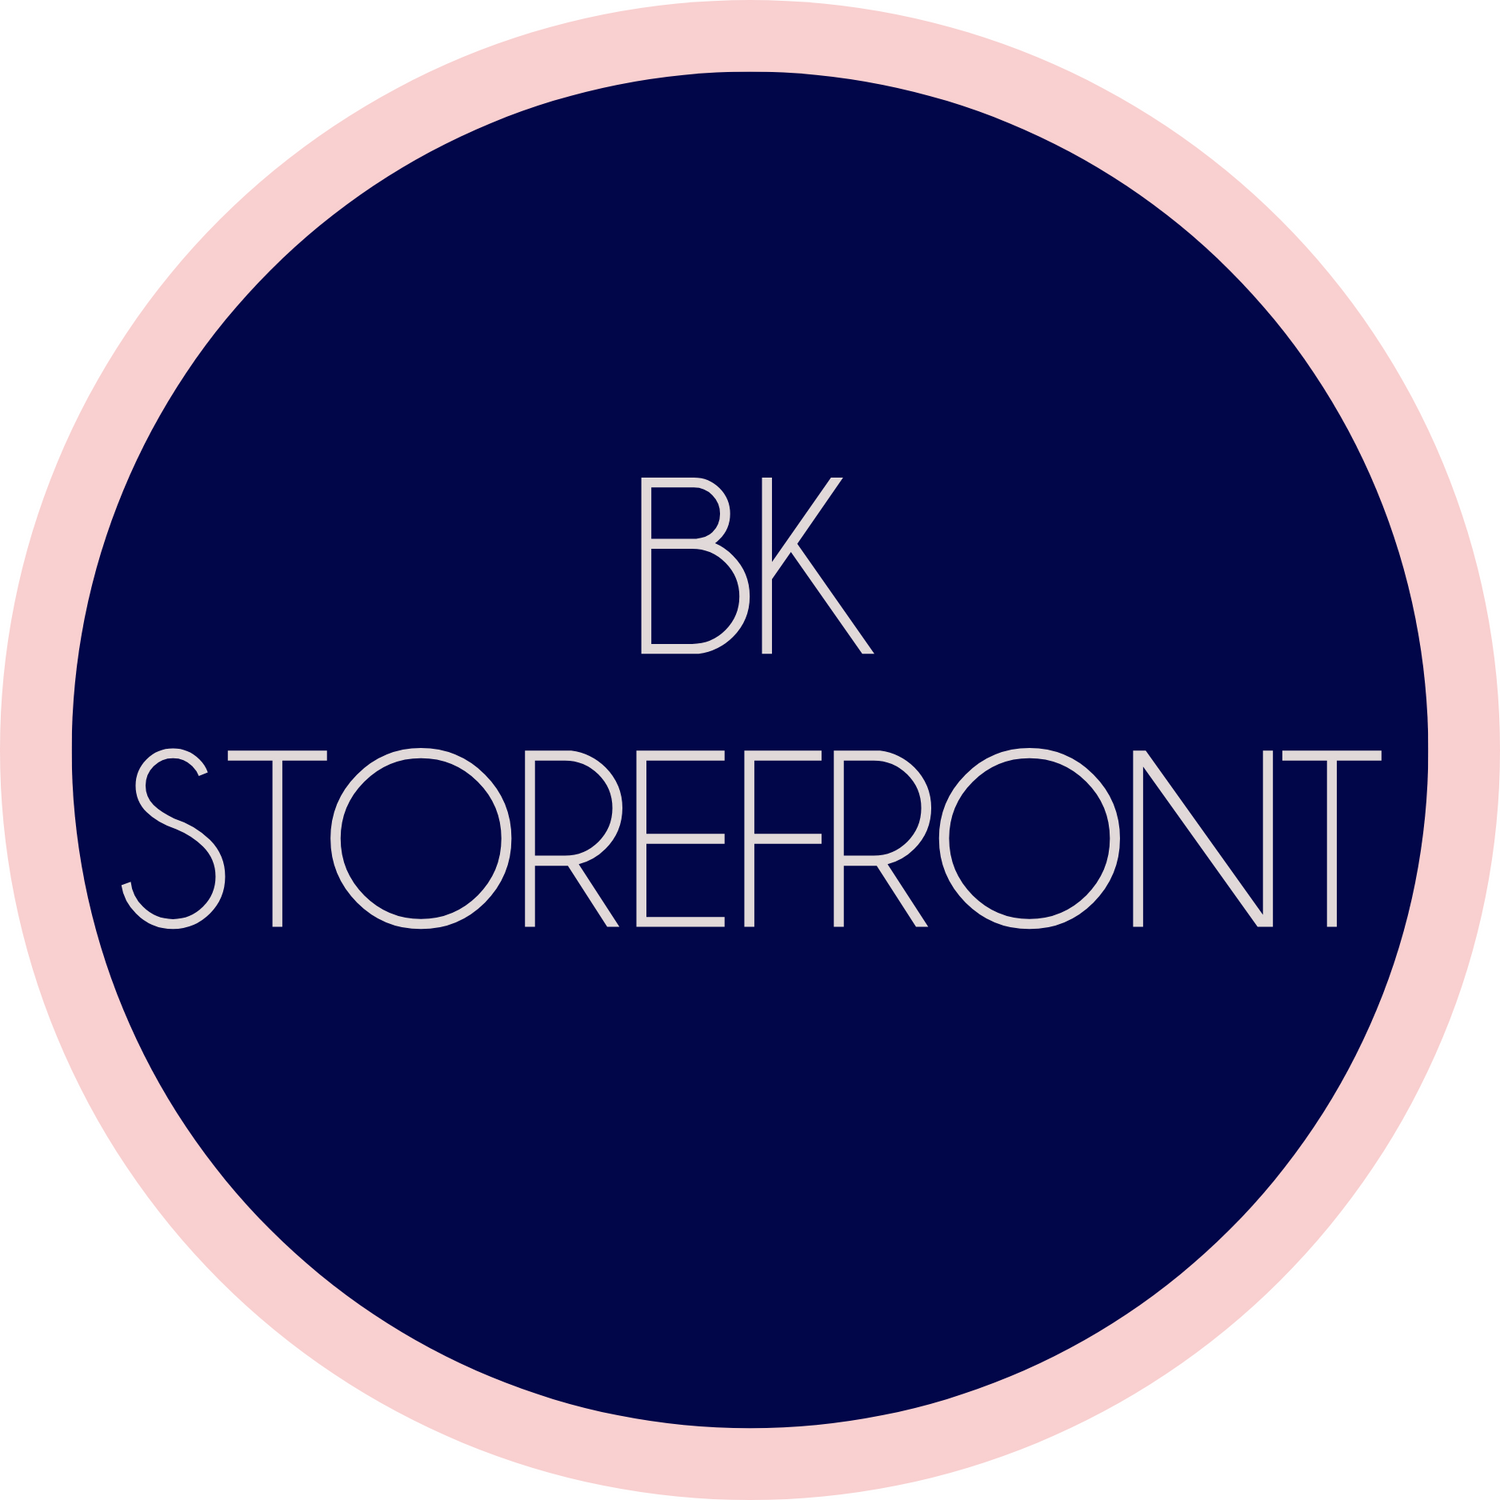 BK Storefront